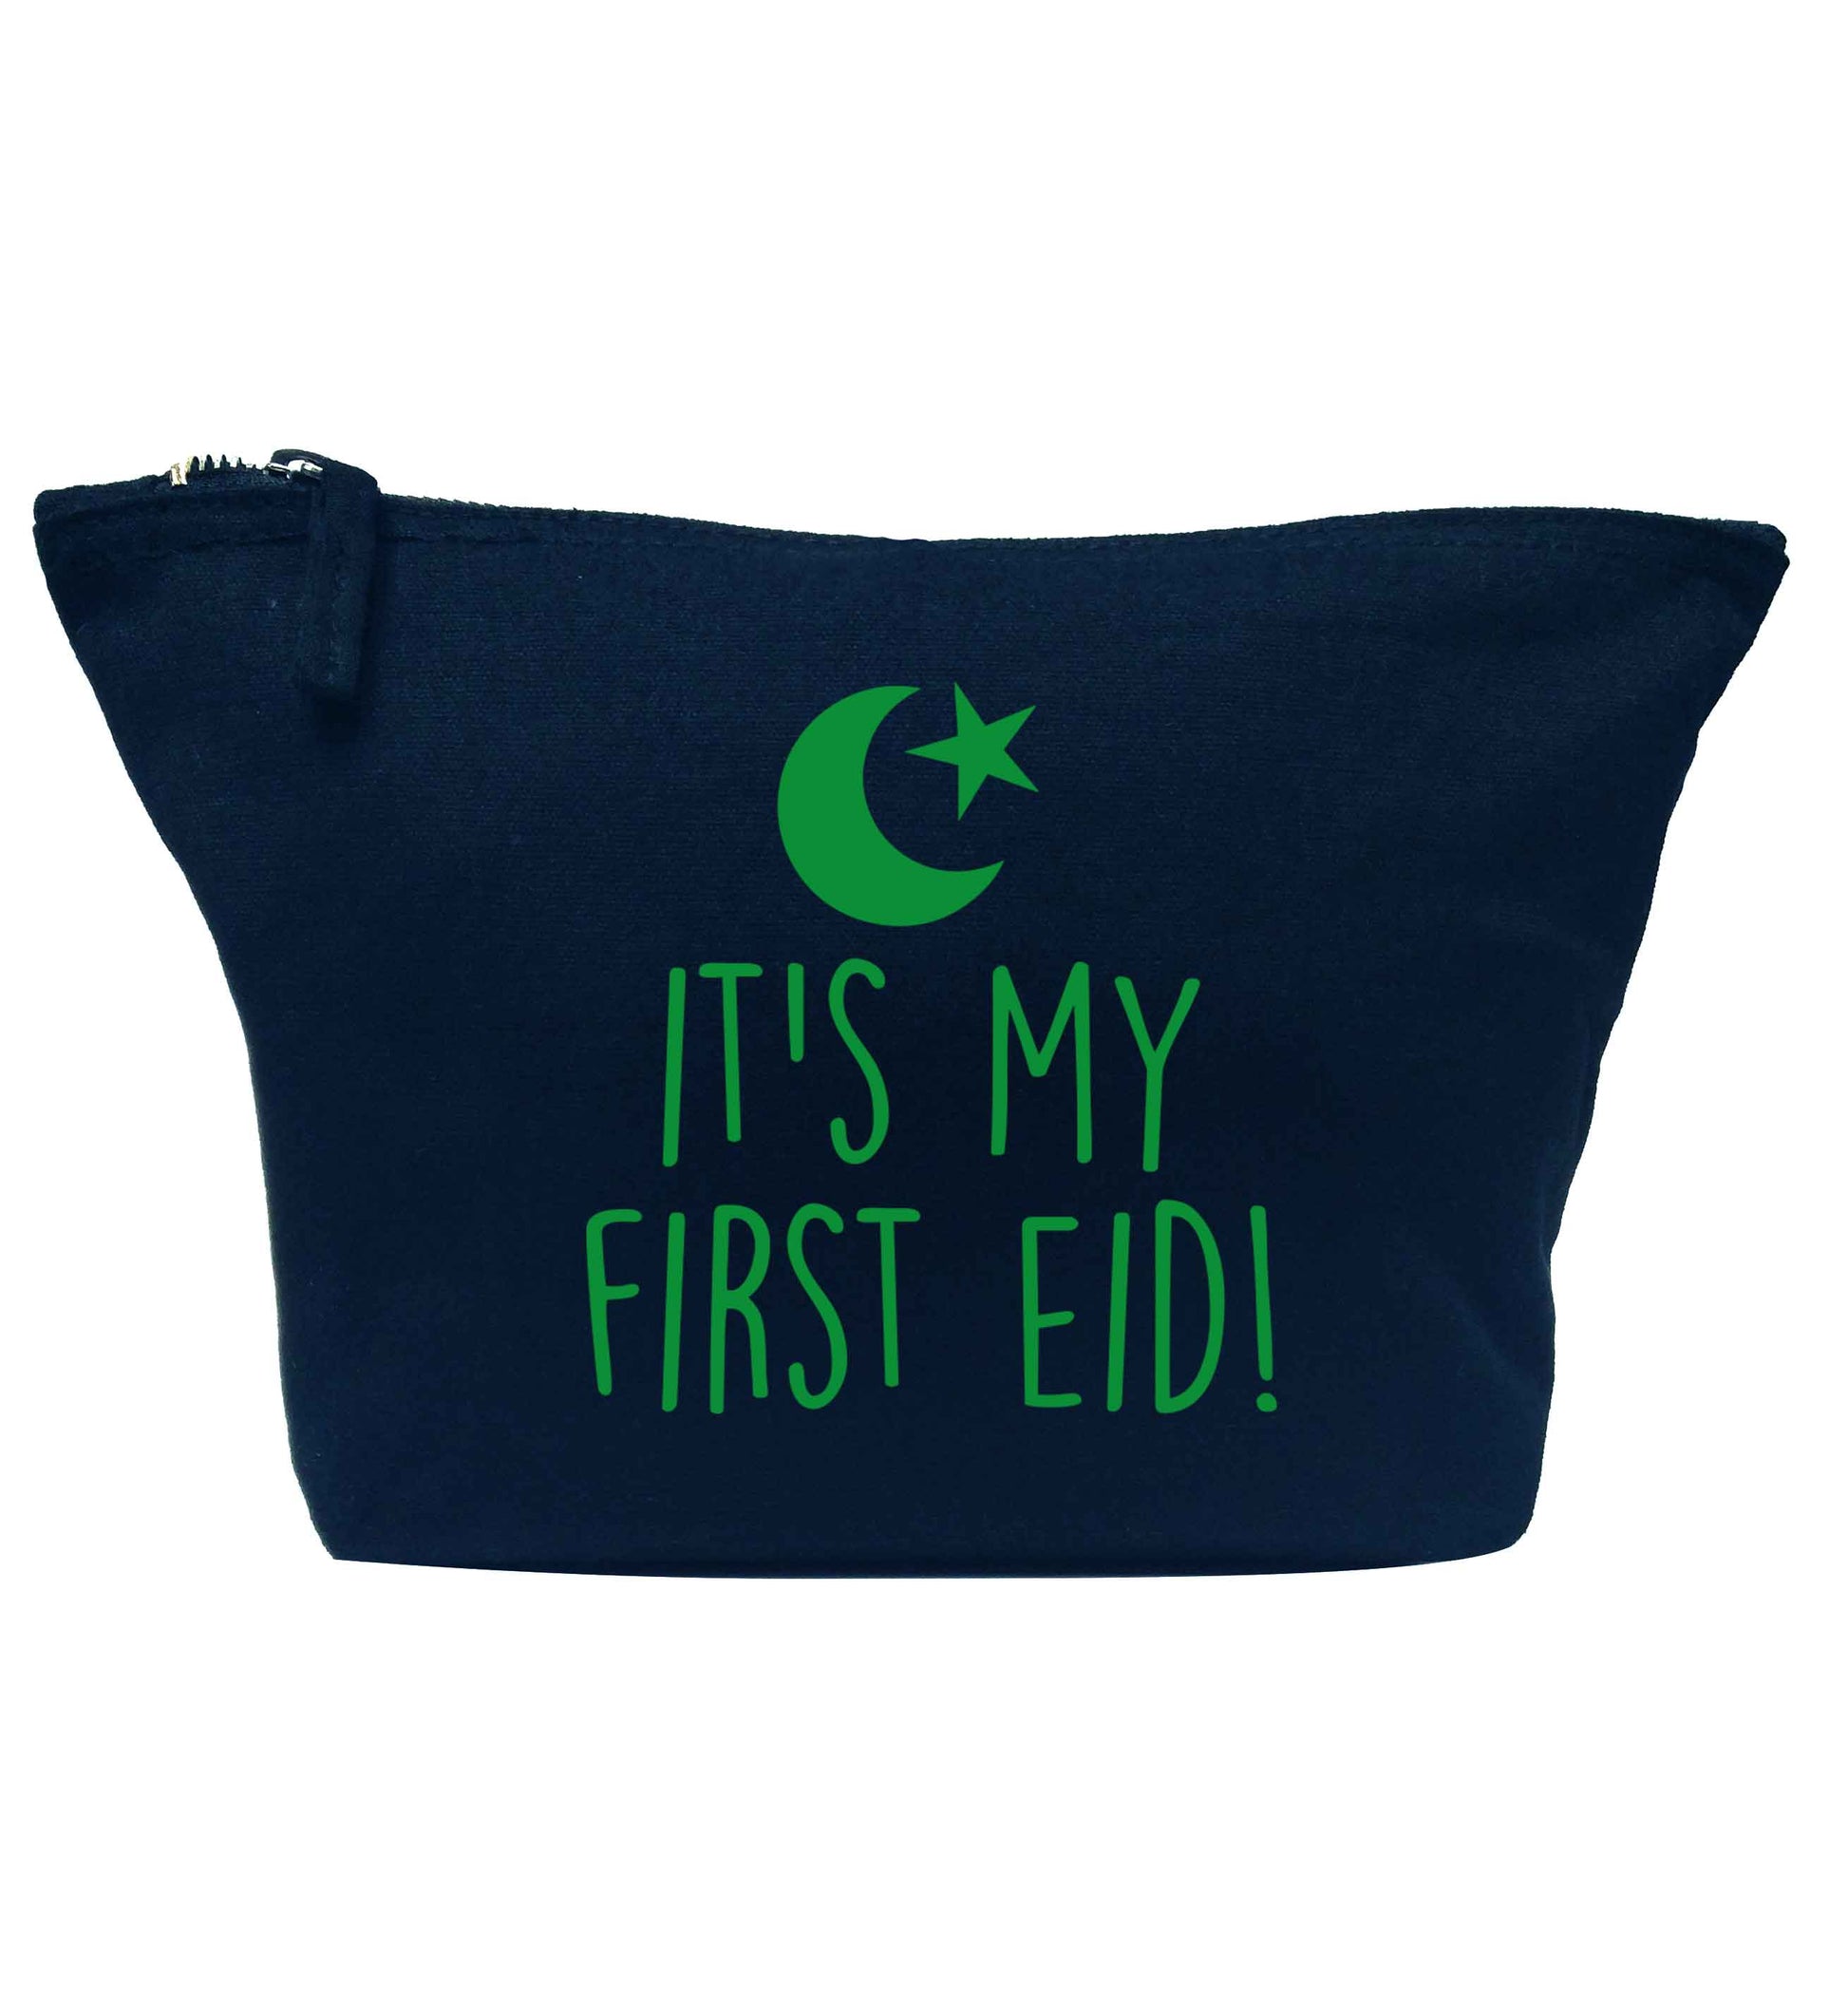 It's my first Eid navy makeup bag